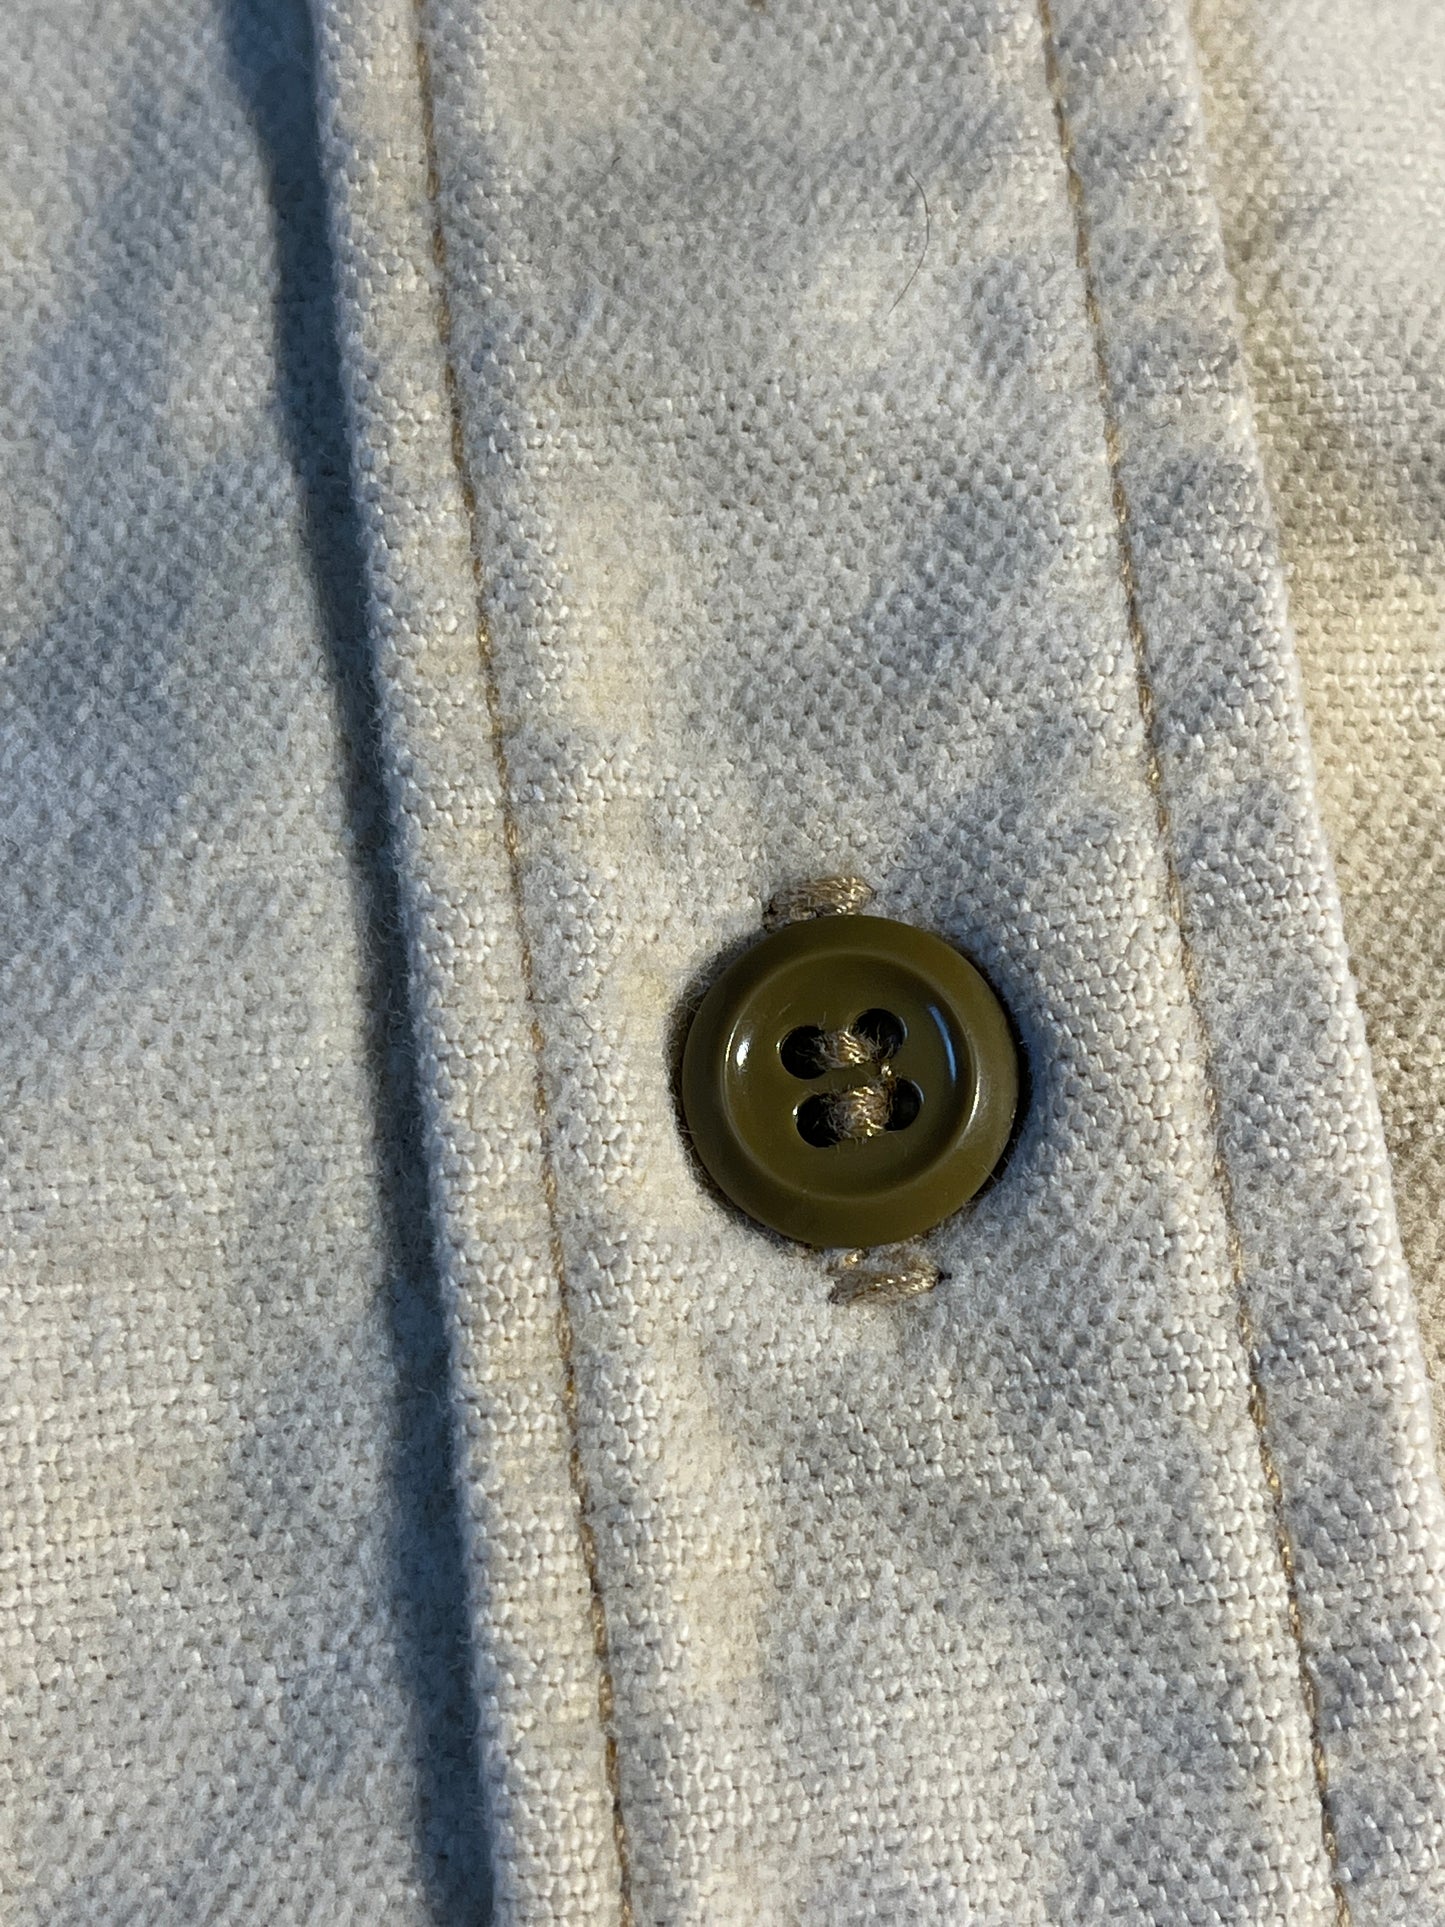 Vintage Button Up Shirt SOFT